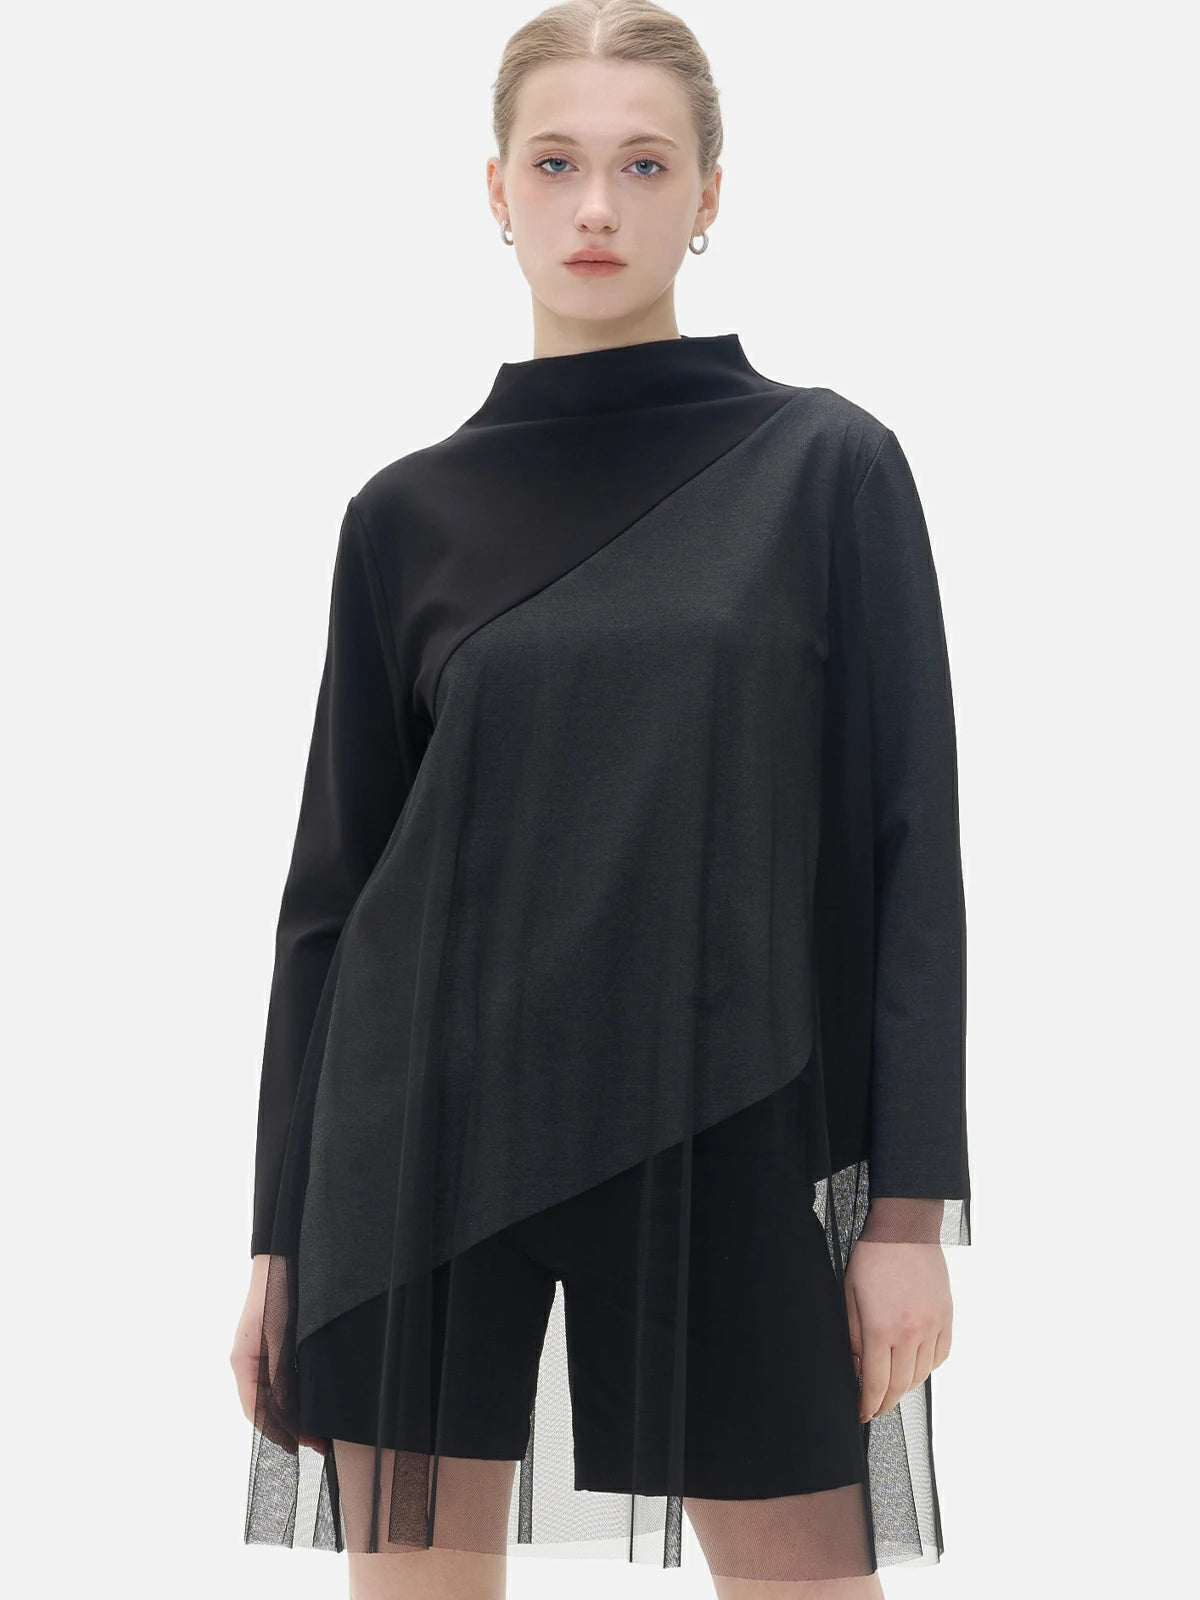 Stylish half-high collar women&#39;s black-gray color block top